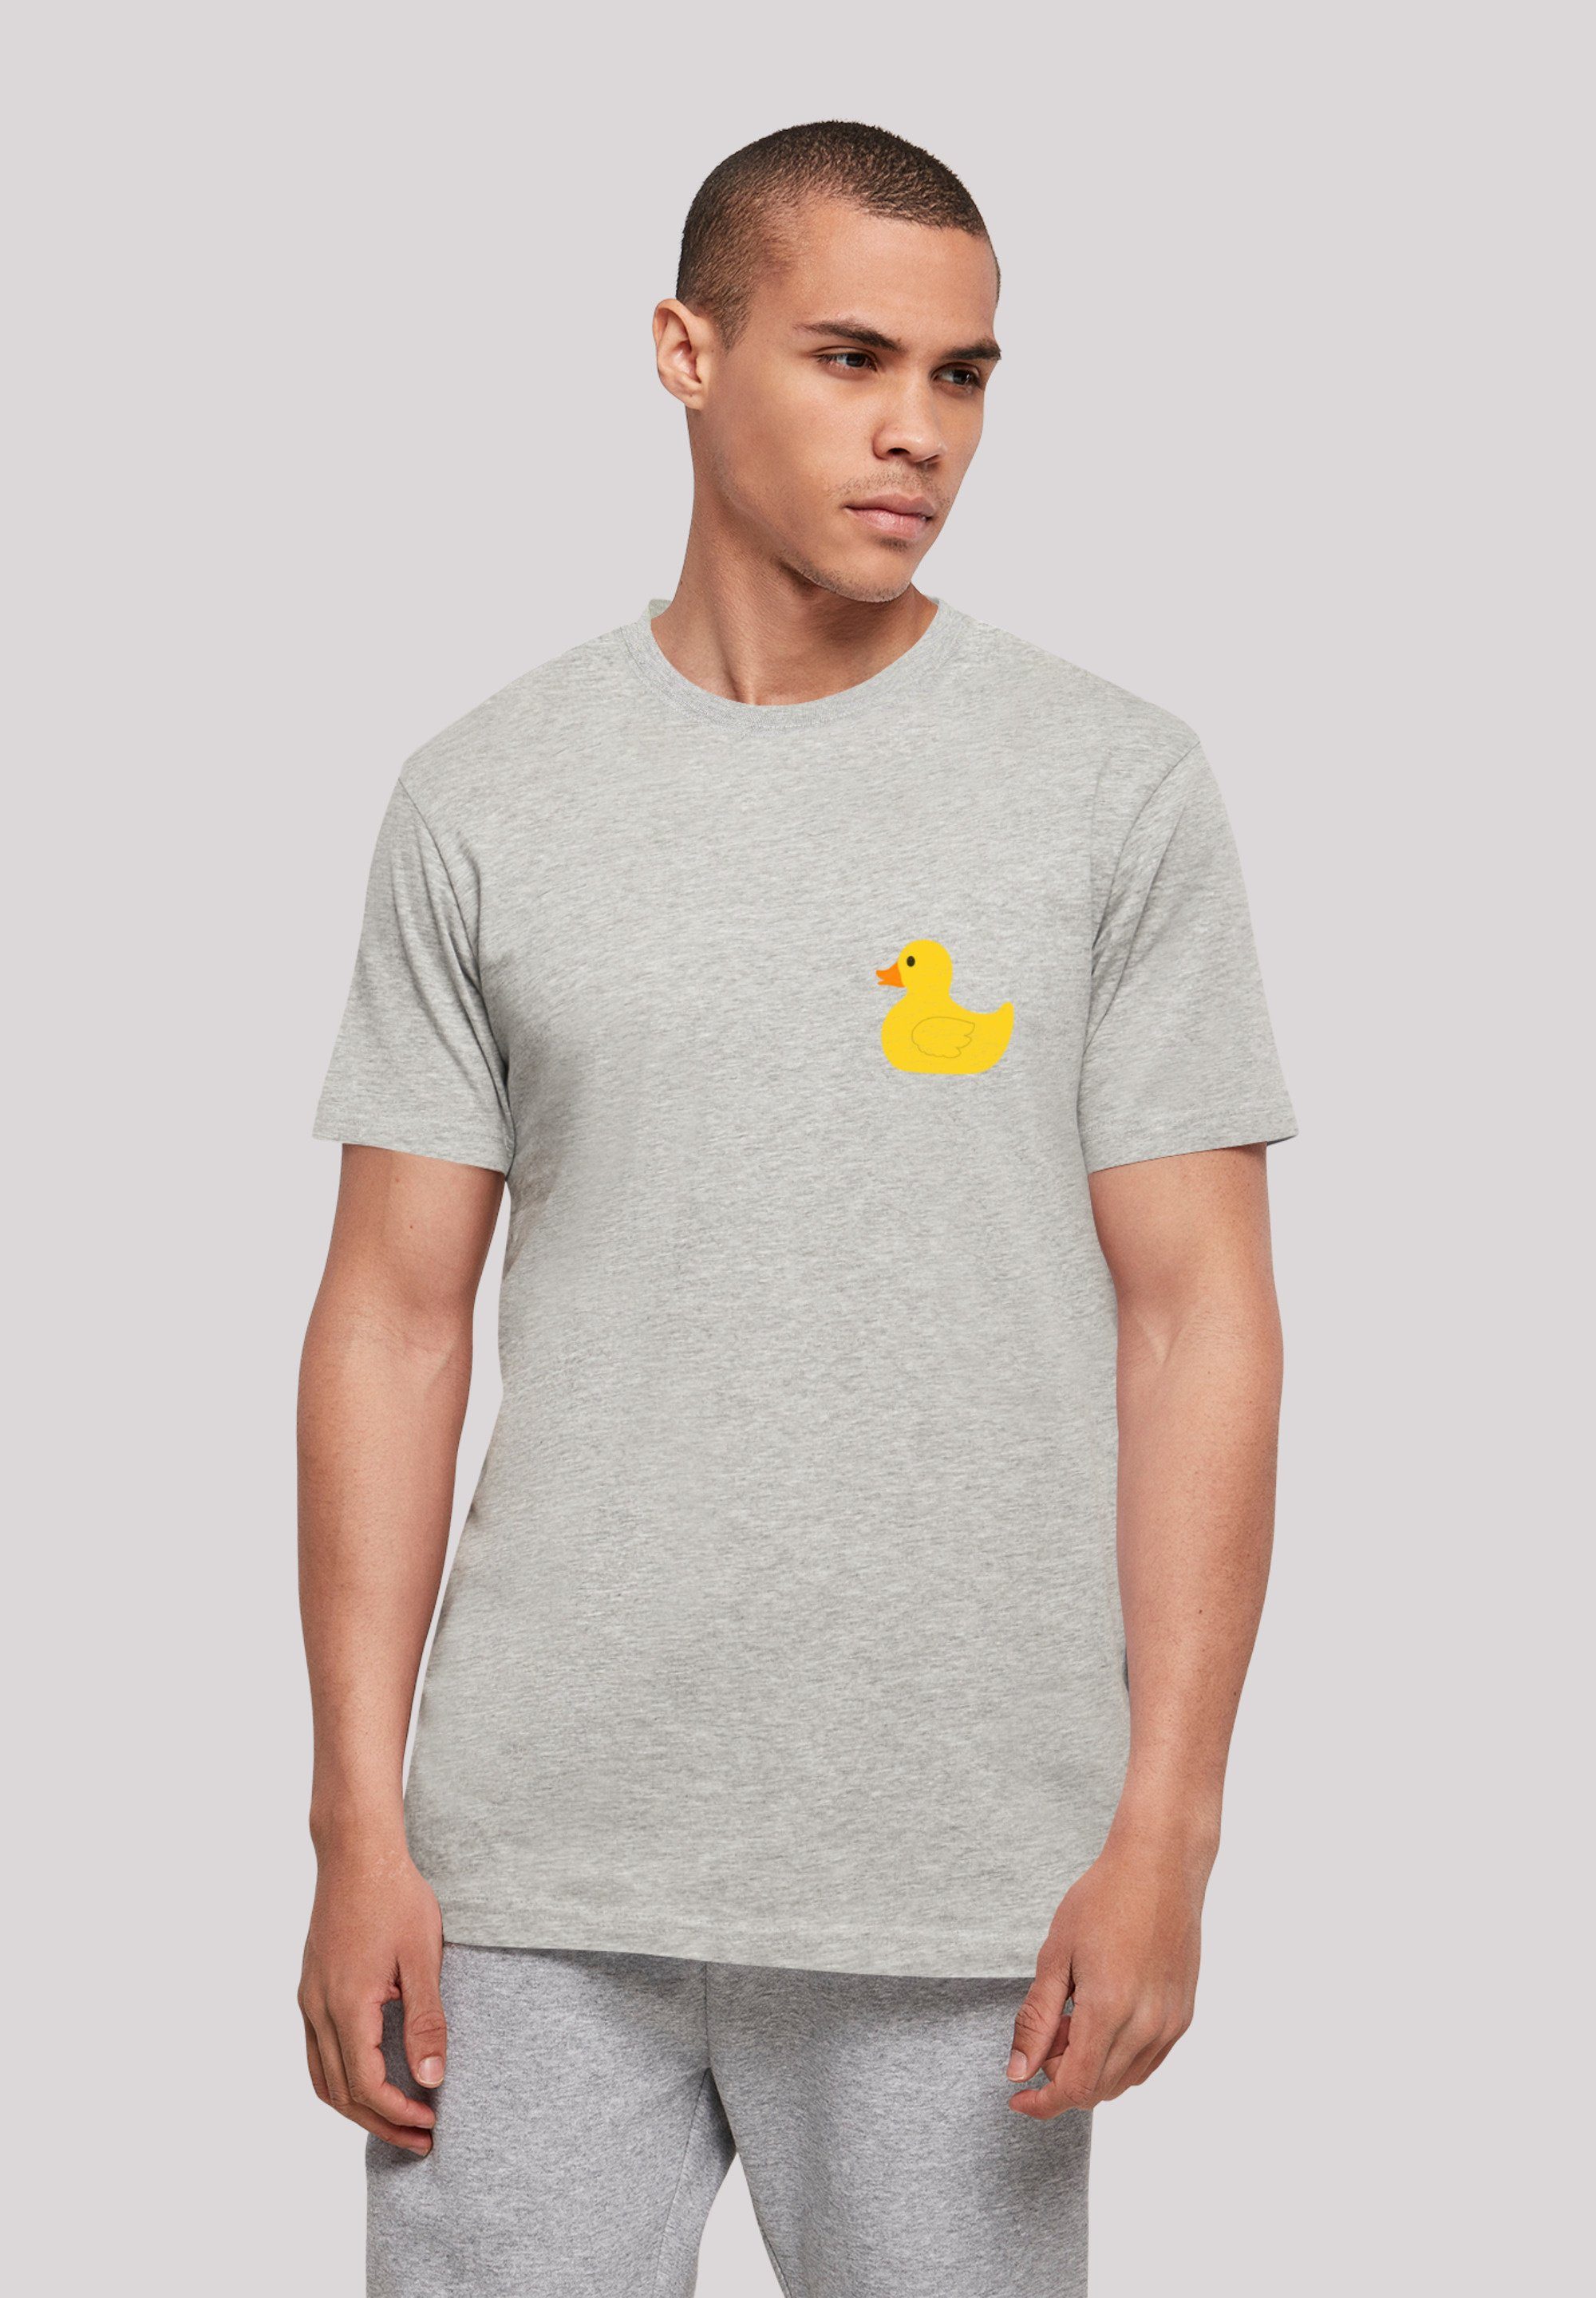 TEE F4NT4STIC Rippbündchen Print, Duck UNISEX Rubber Hals am T-Shirt Yellow und am Saum Doppelnähte